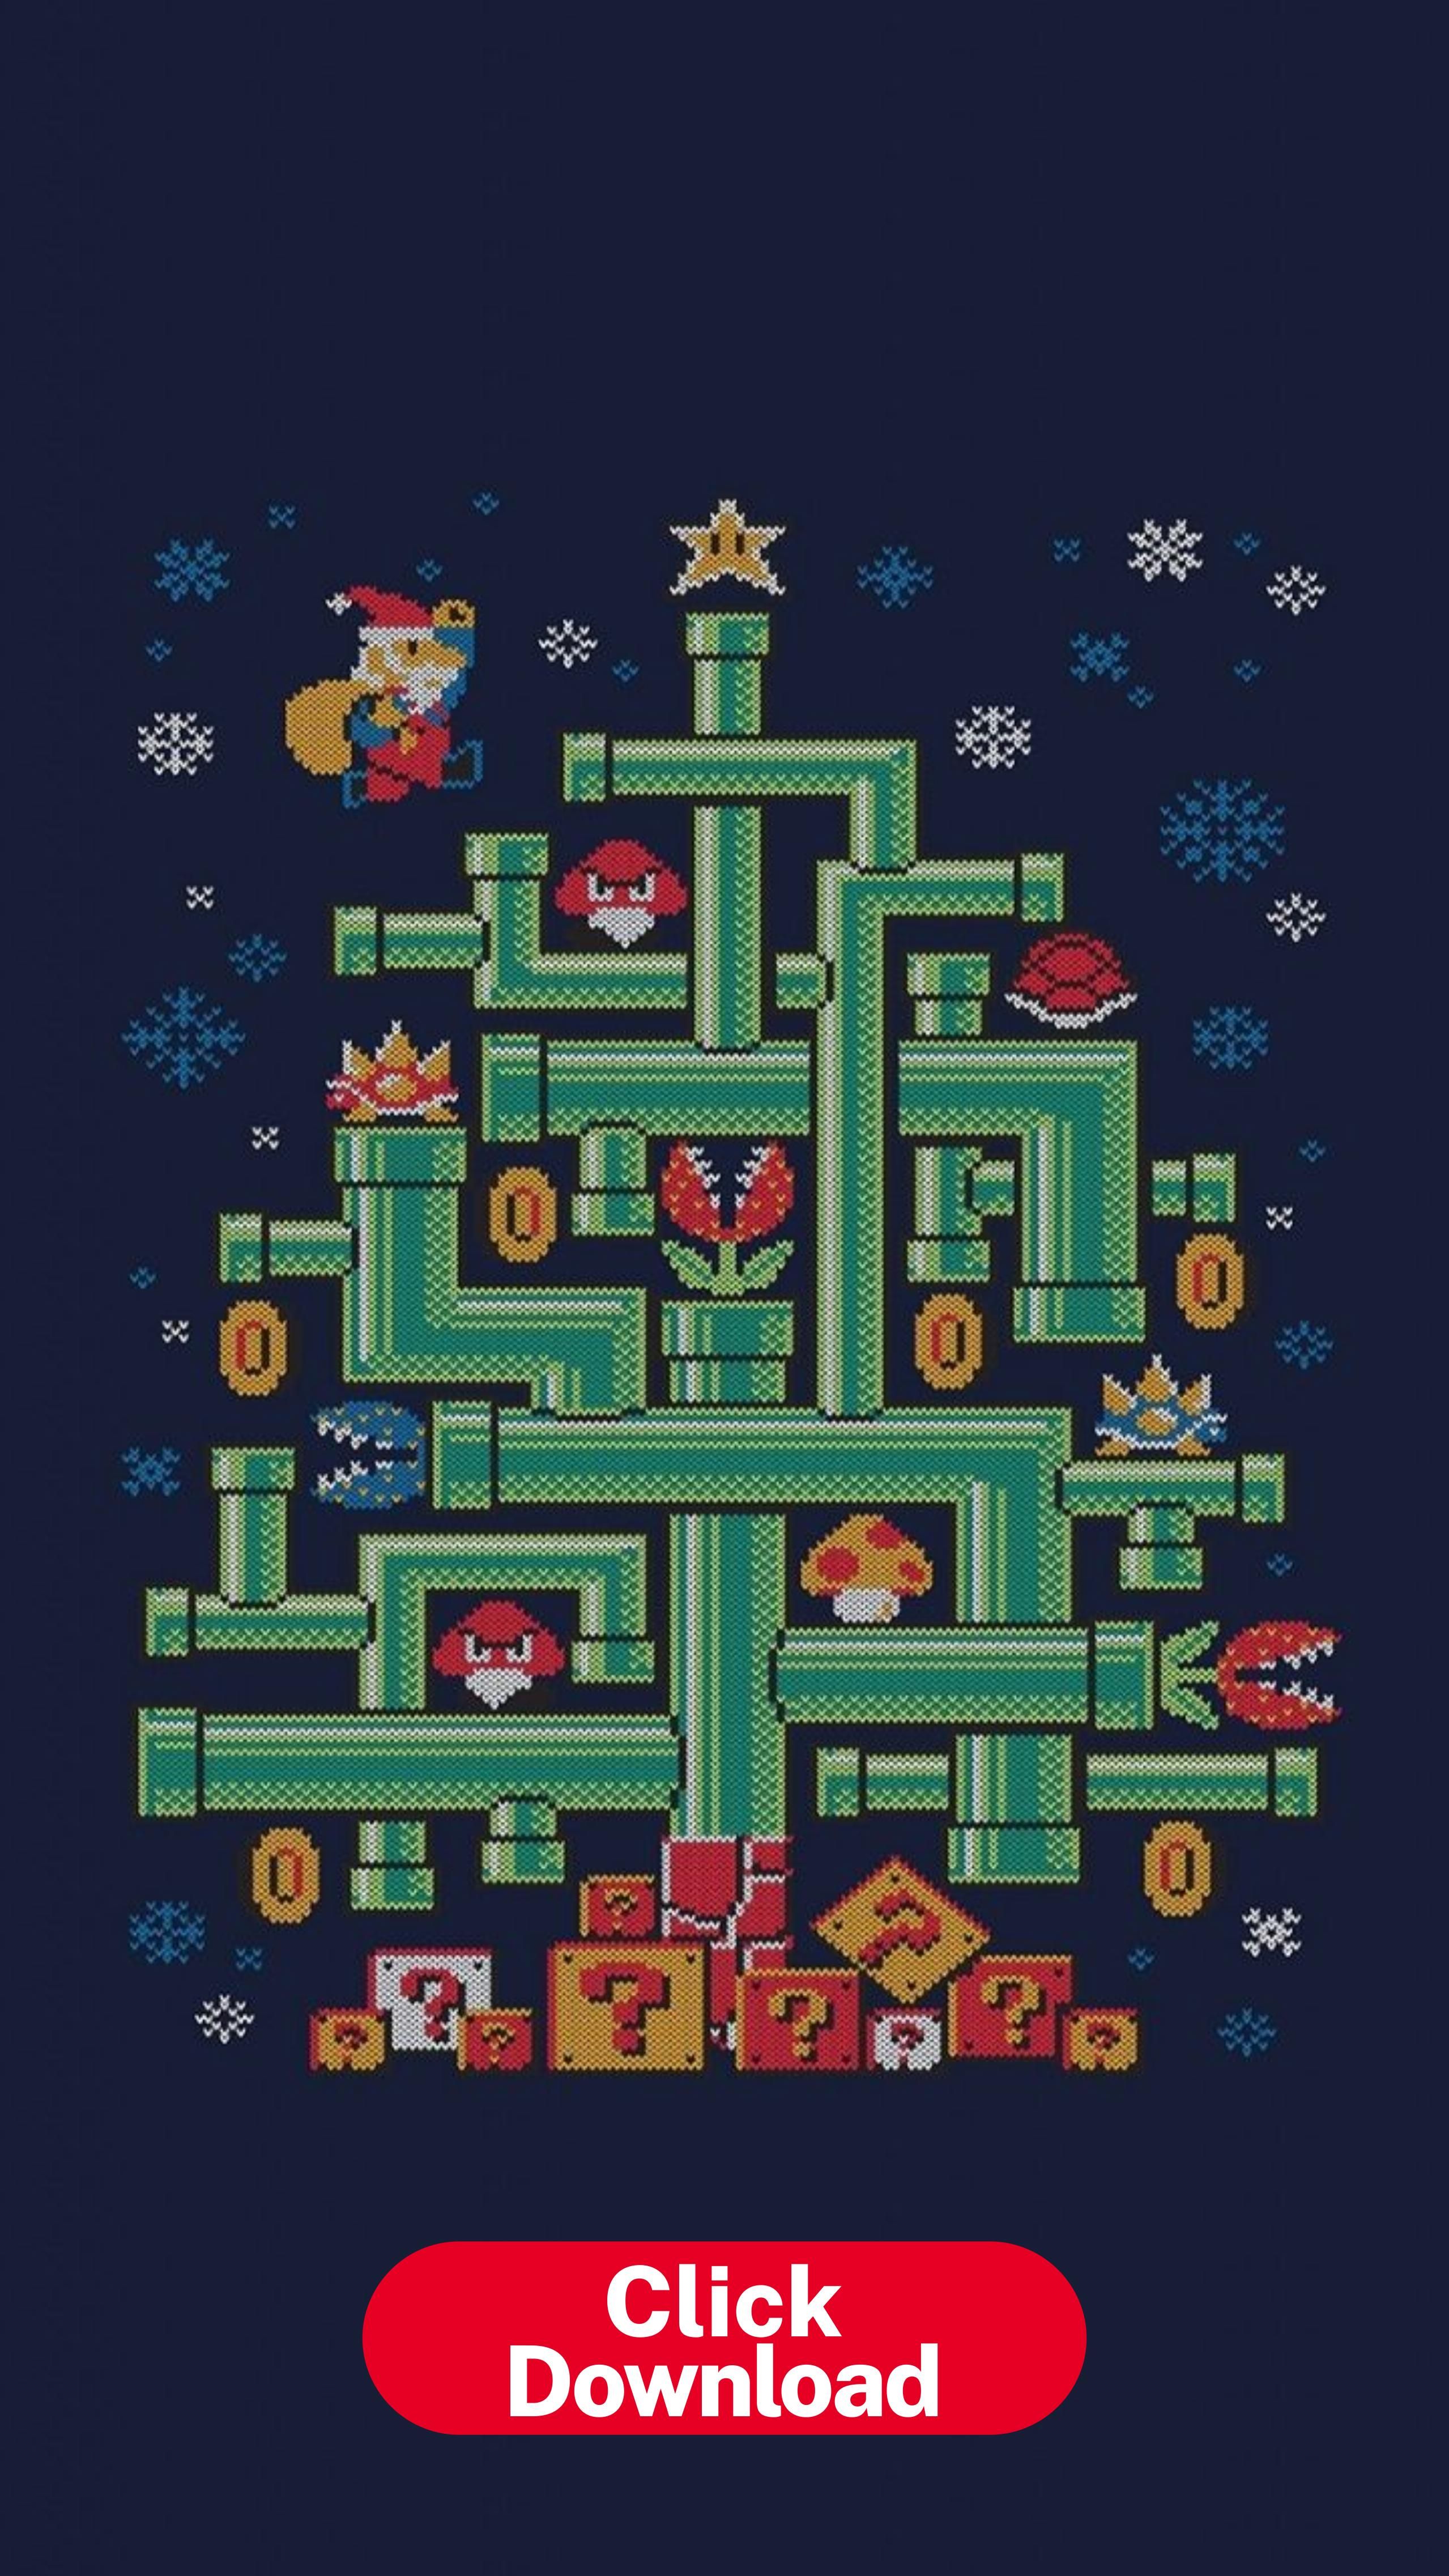 Christmas Gaming Wallpapers